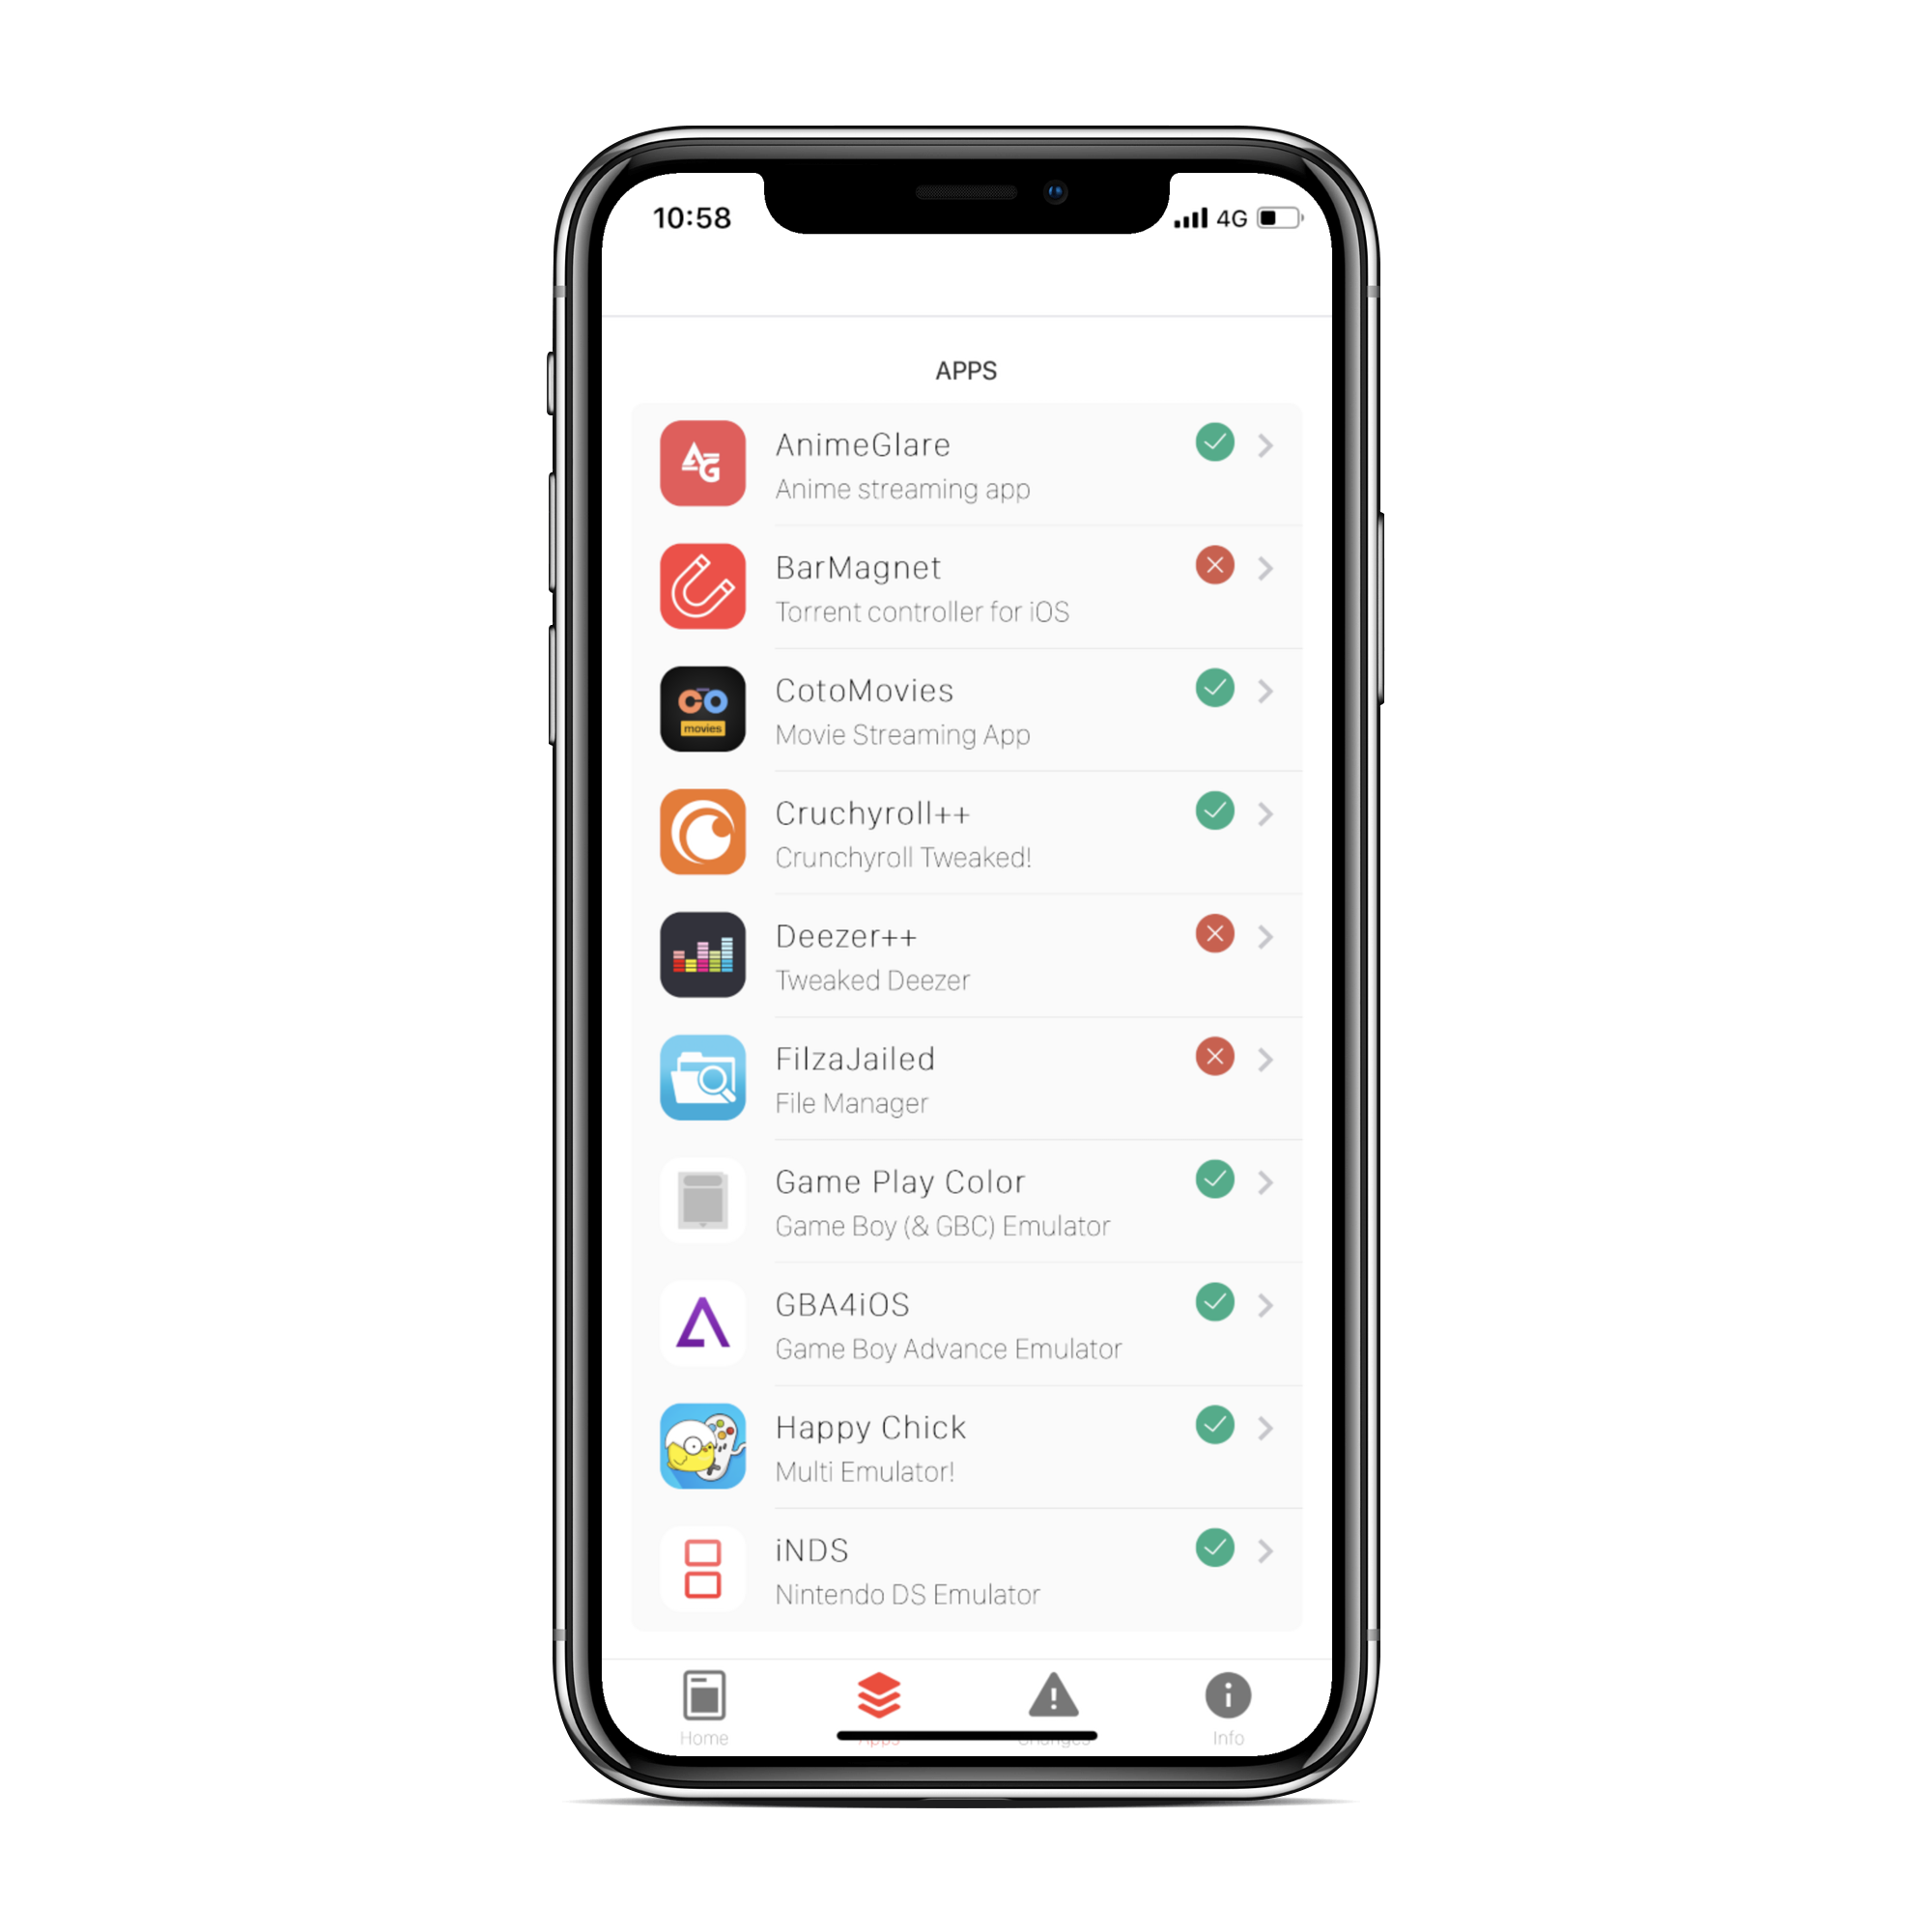 iOSEmus App Installer for iOS (iPhone/ iPad)